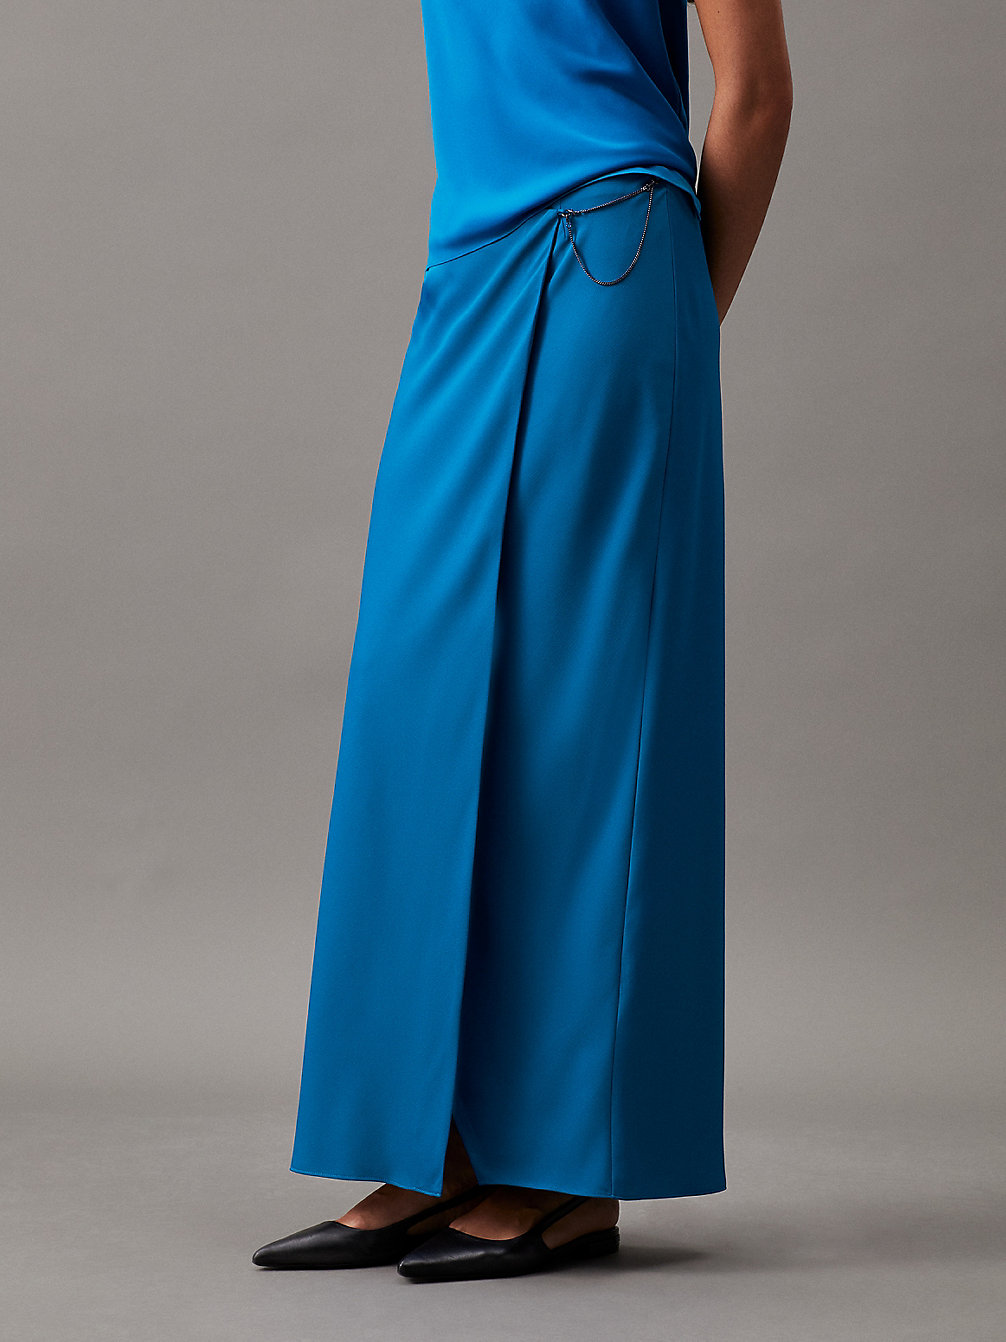 PARRISH BLUE Crepe Maxi Wrap Skirt undefined Women Calvin Klein